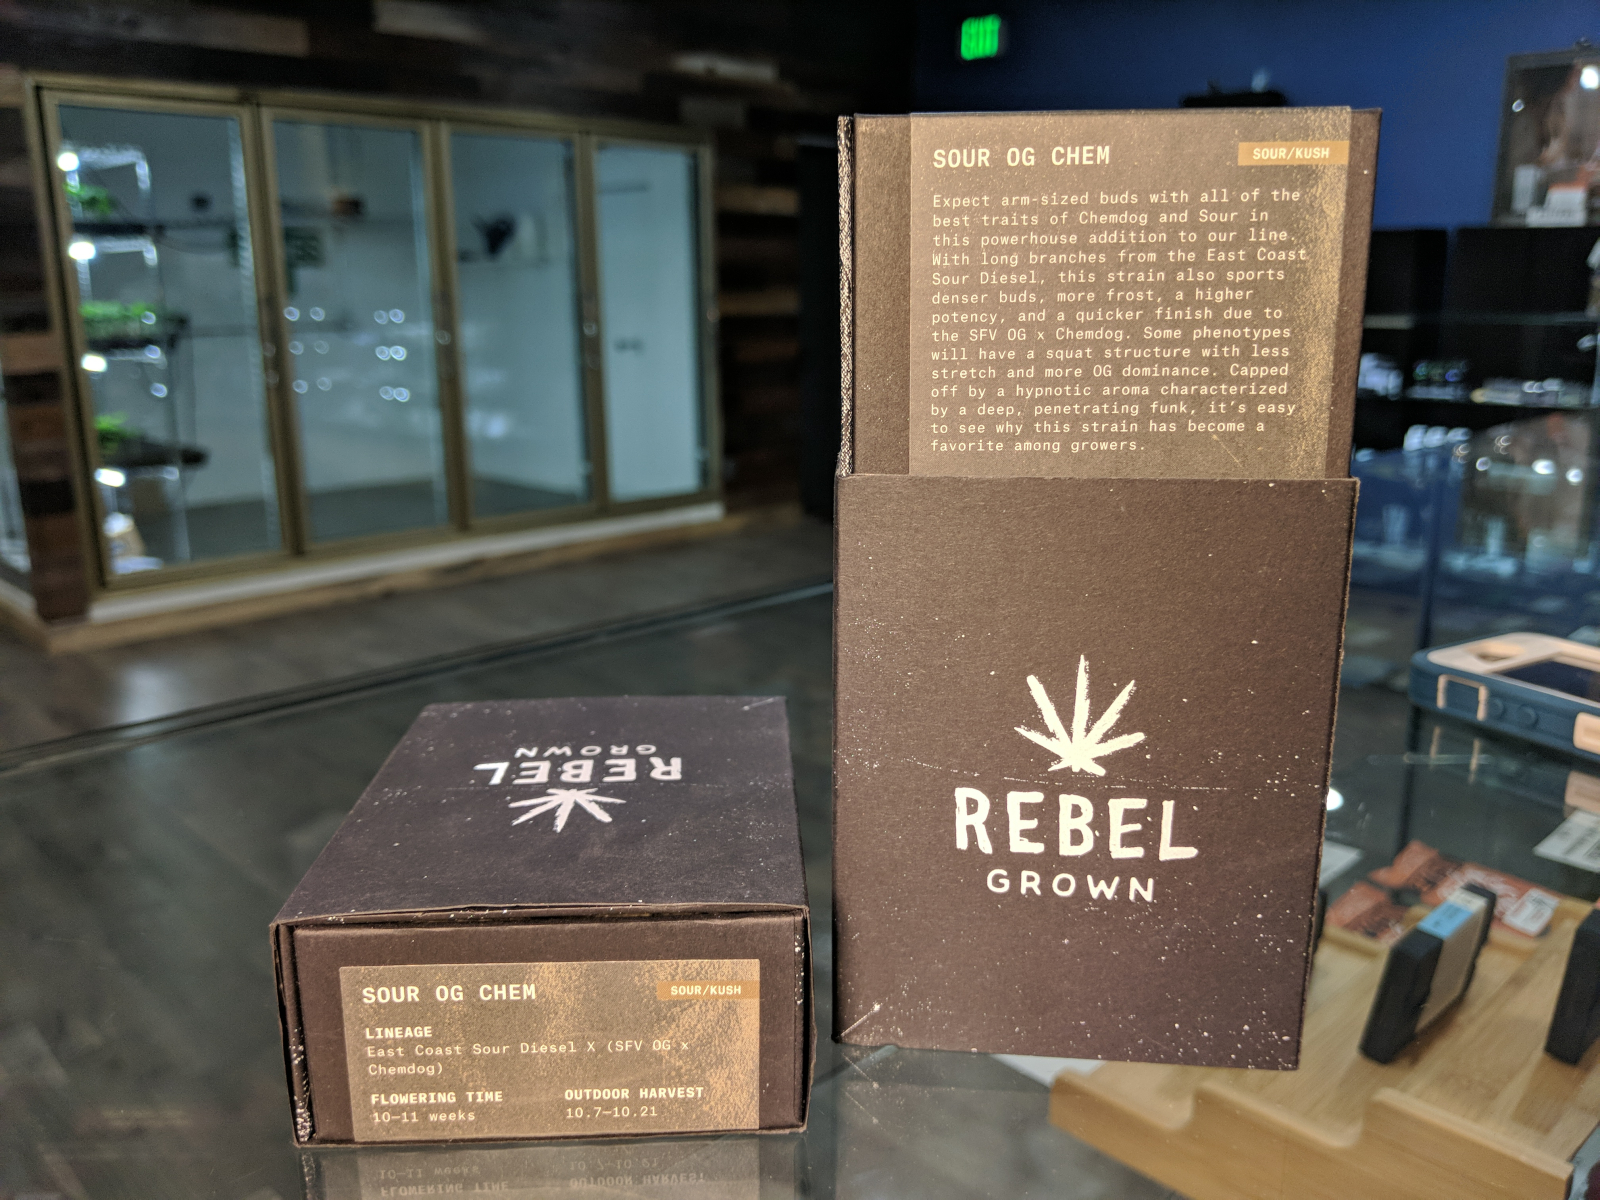 Rebel grown sour og chem 12 cannabis seeds